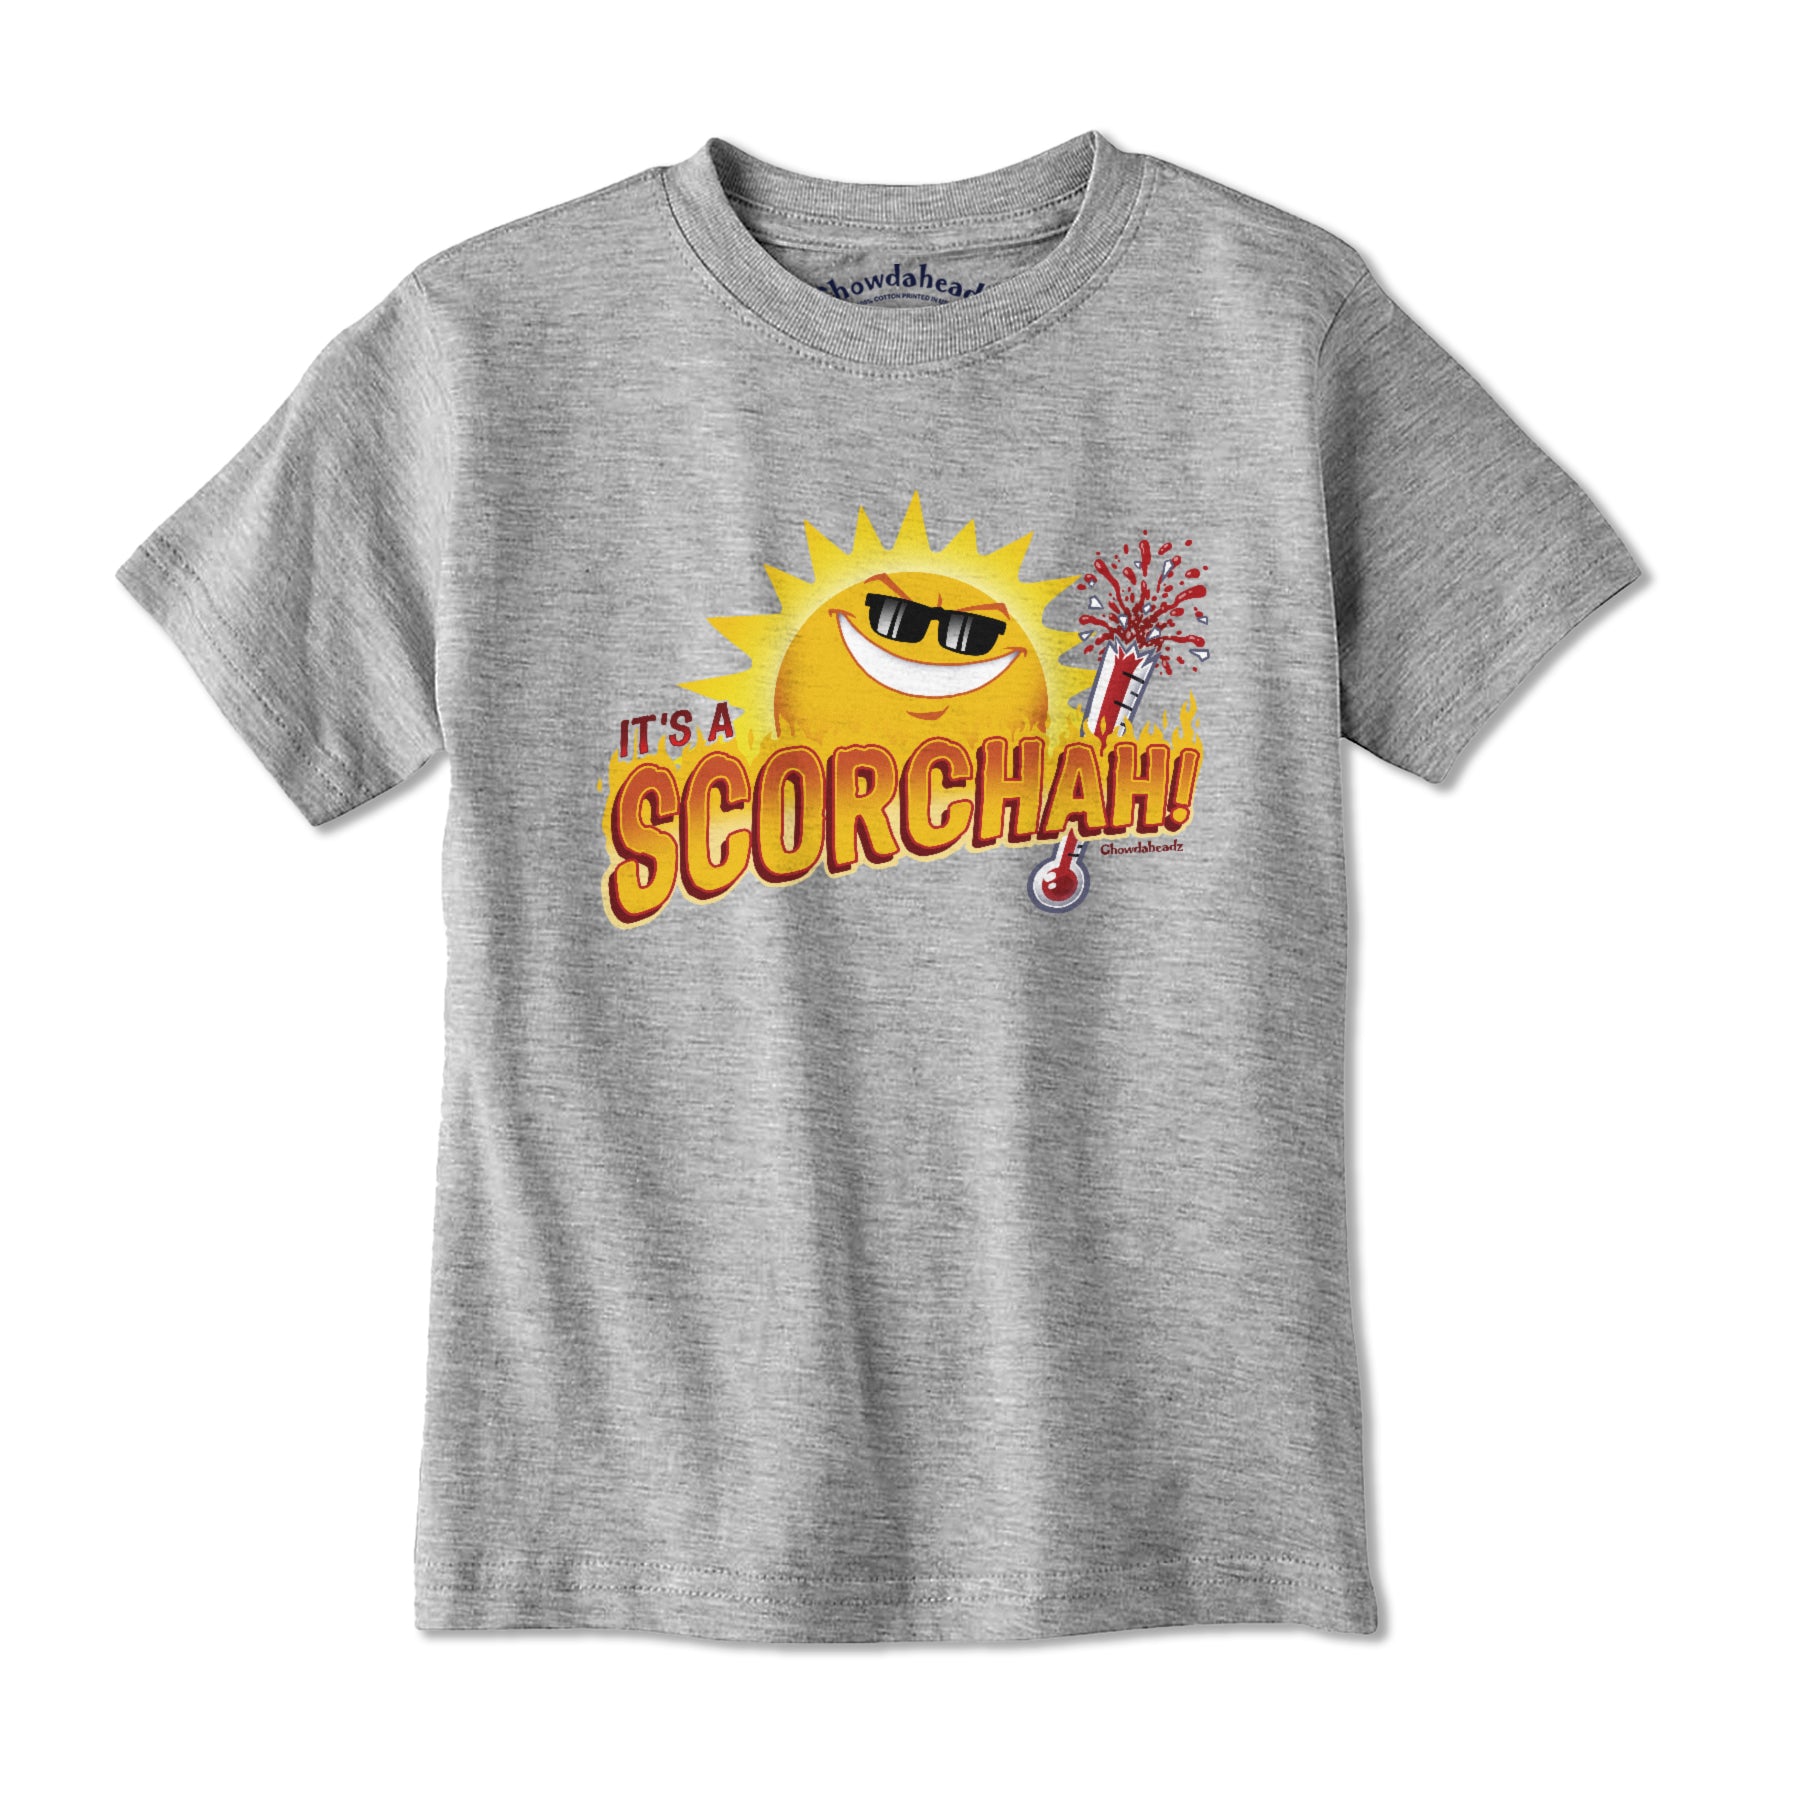 It's A Scorchah! Youth T-Shirt - Chowdaheadz